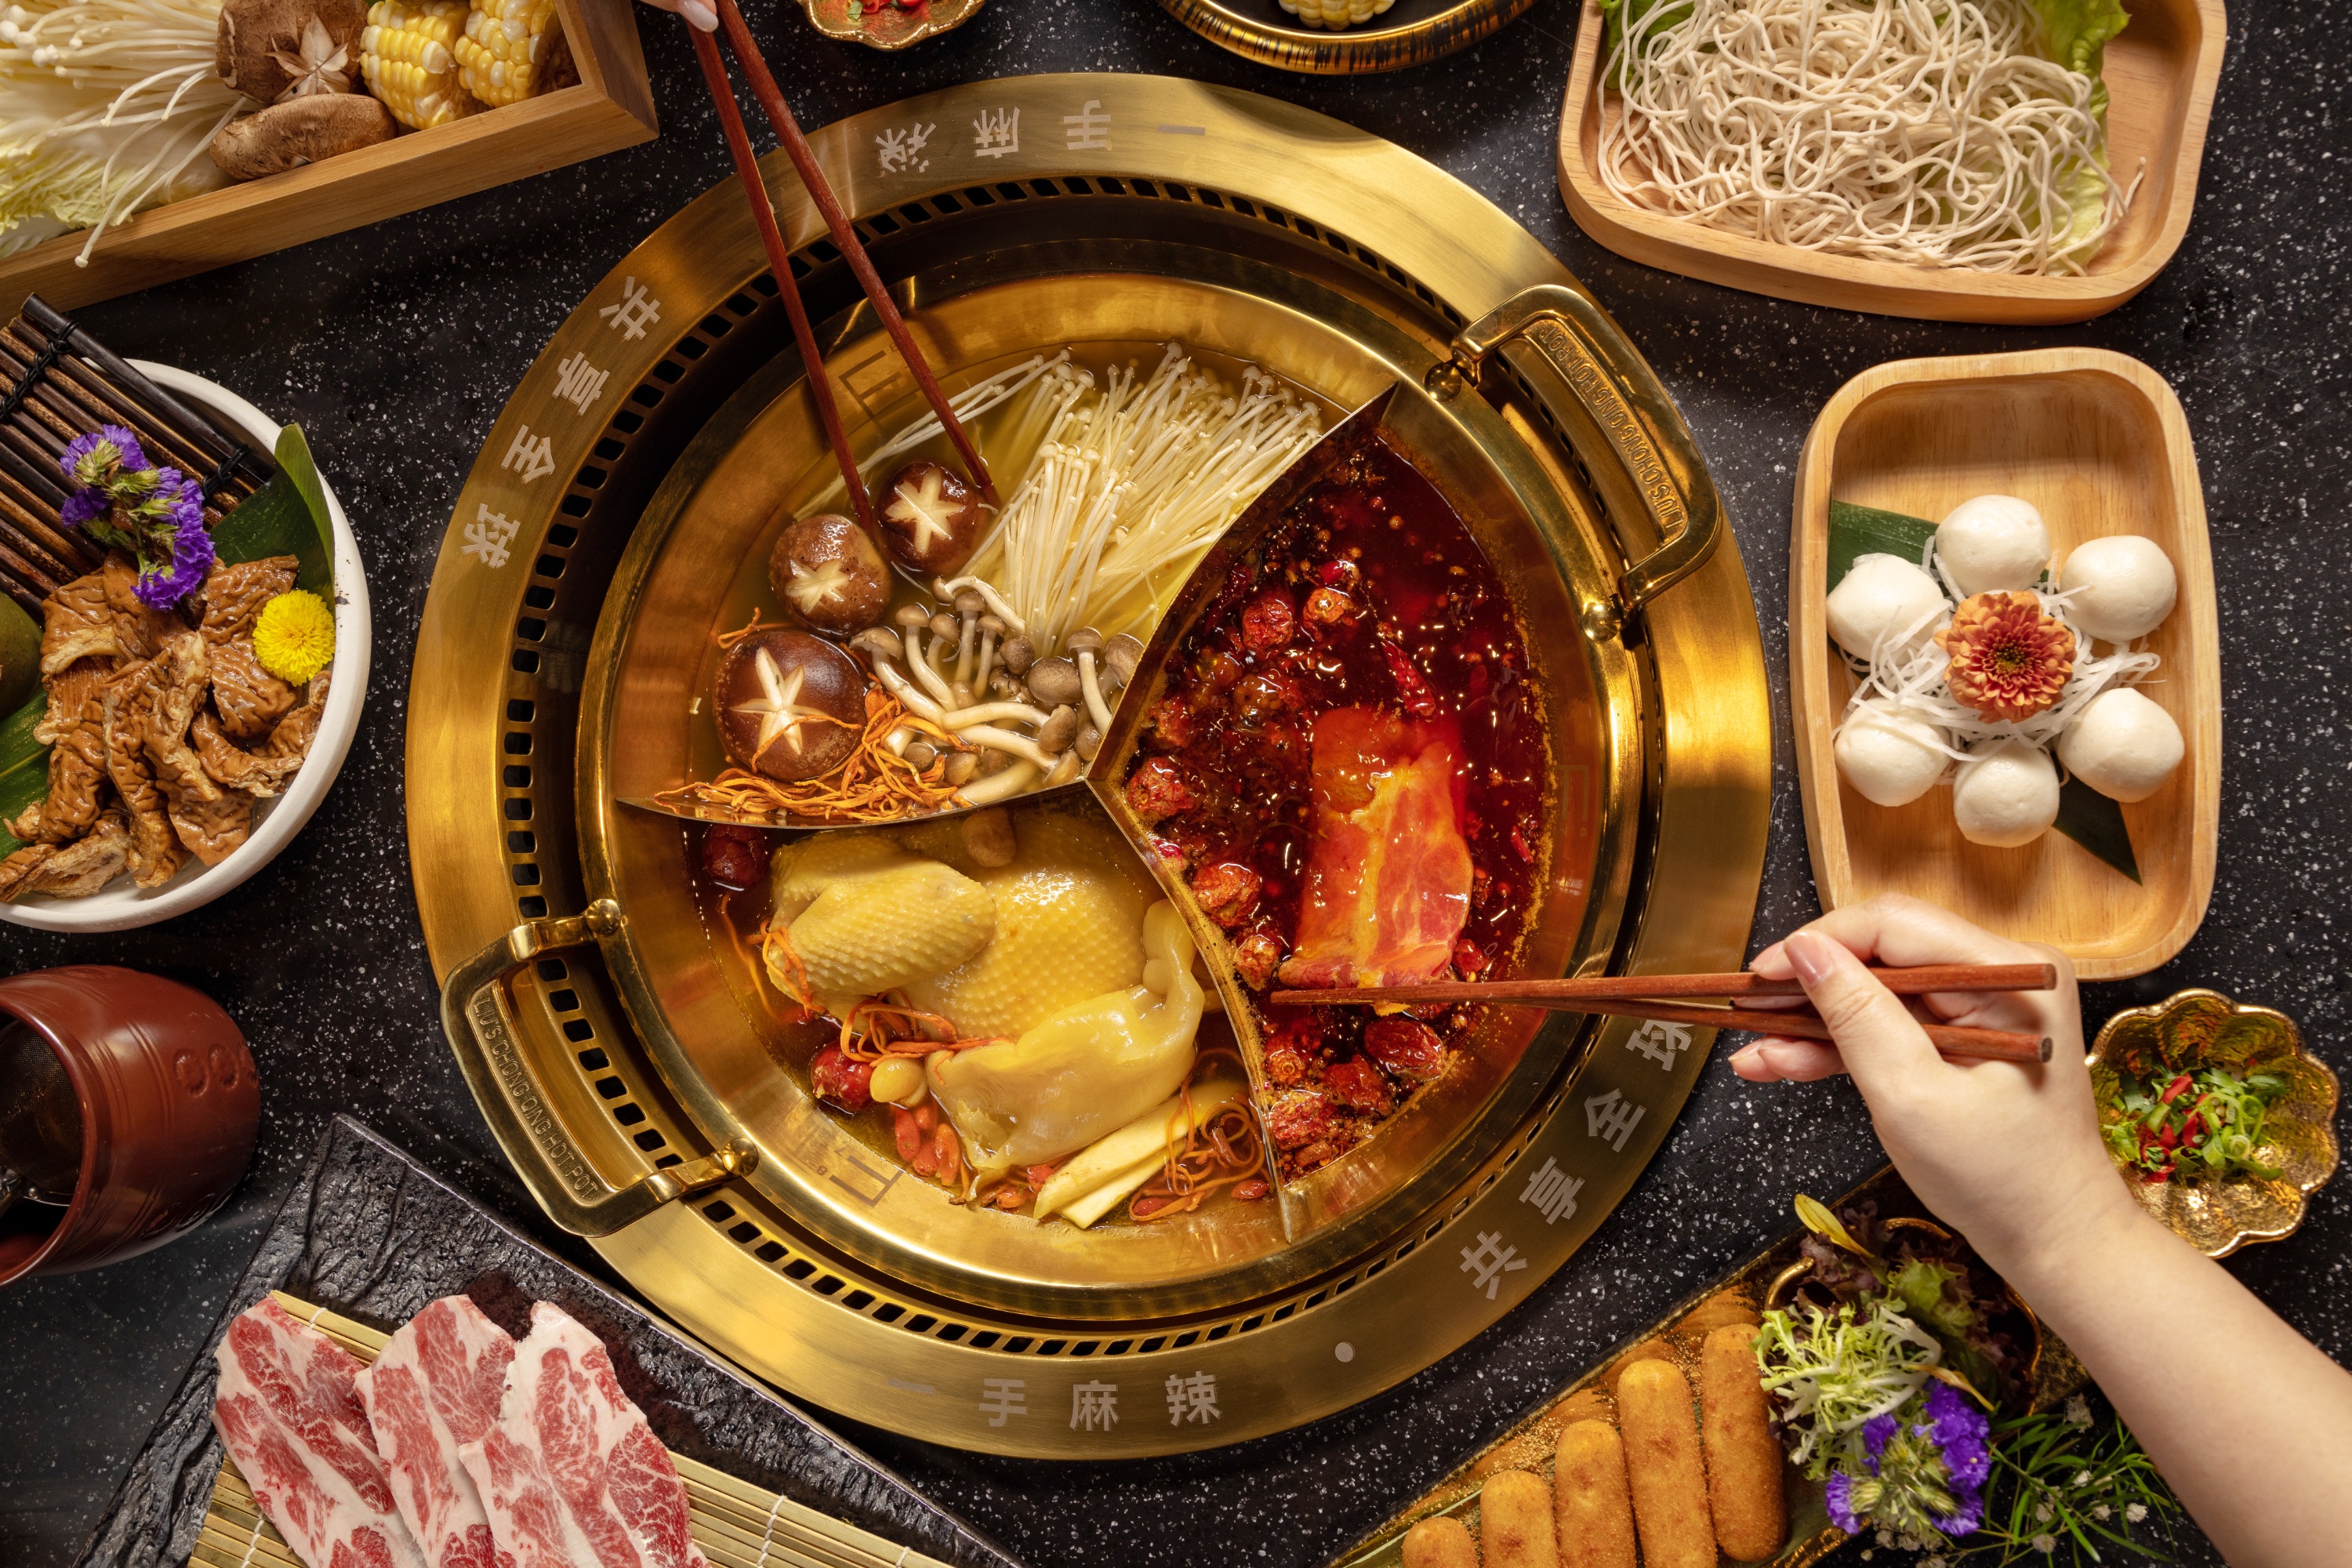 【Exclusive 50% discount】Liu‘s Chong Qing Hot Pot | Dinner Hot Pot Set for 2-4 Persons | Causeway Bay